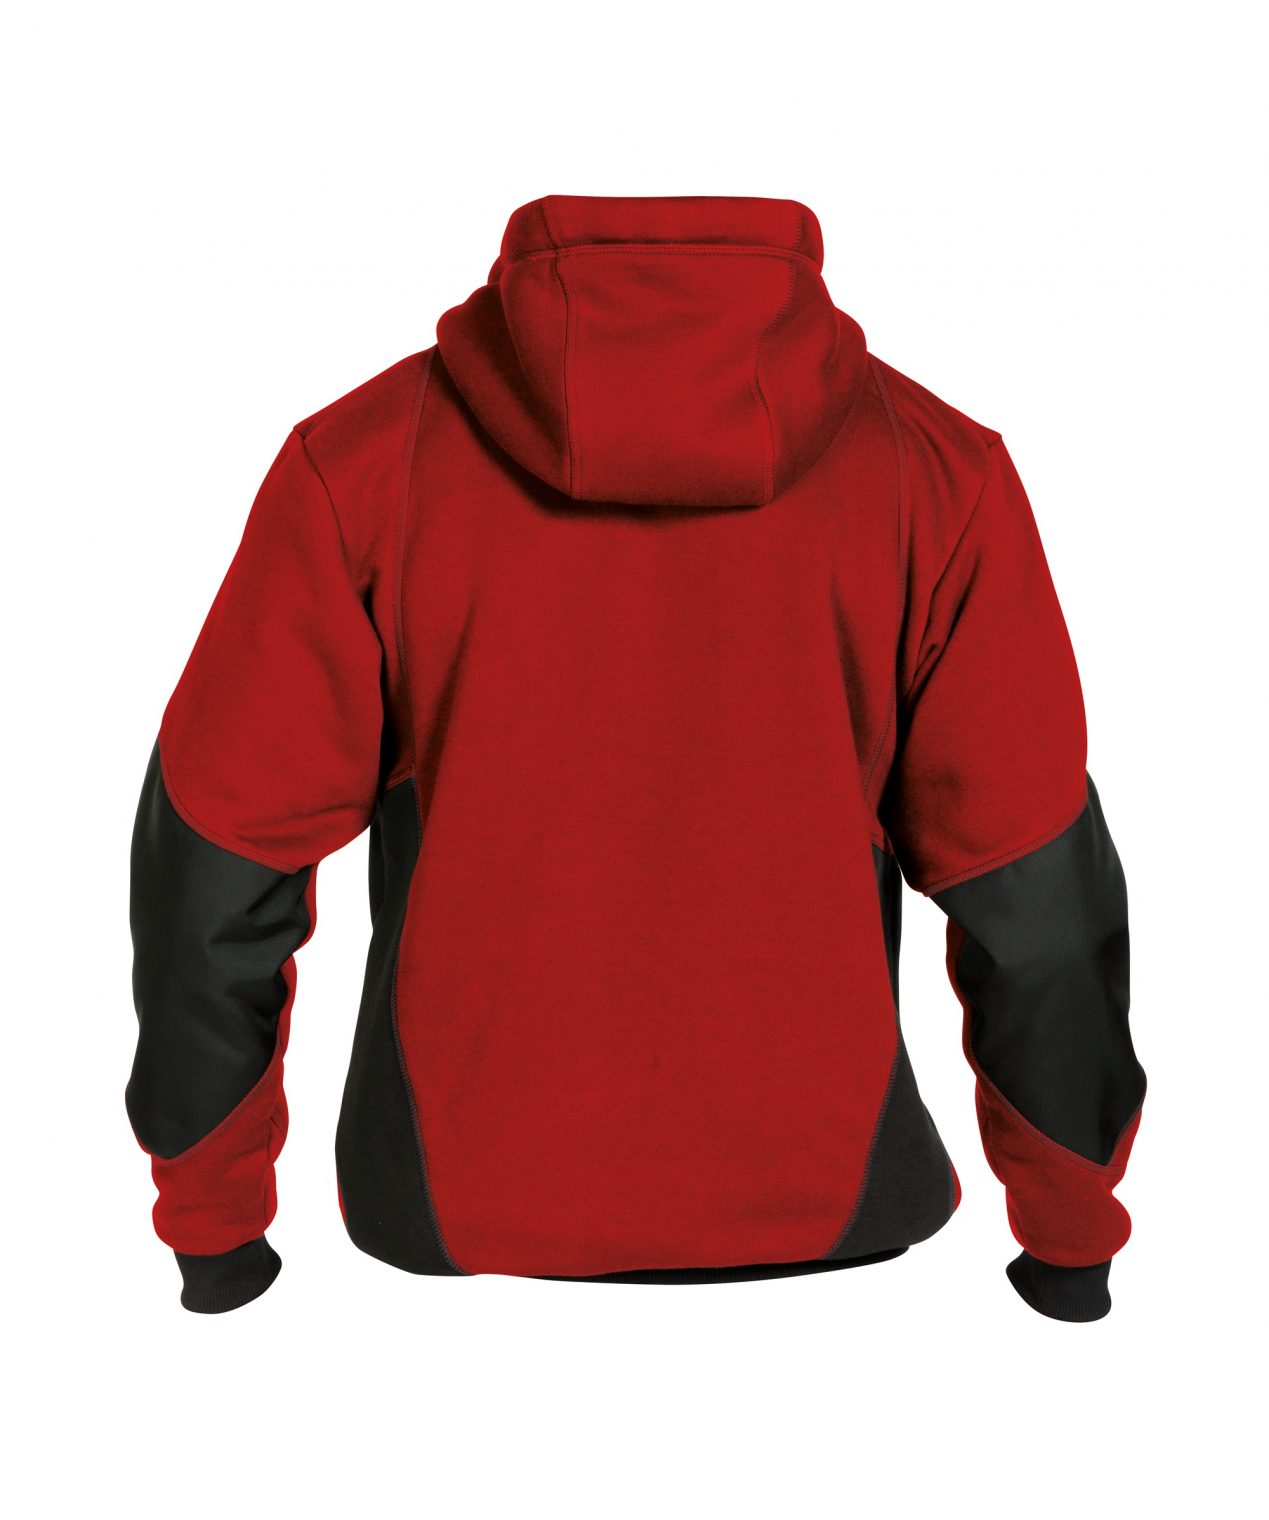 pulse sweatshirt jacket red black back